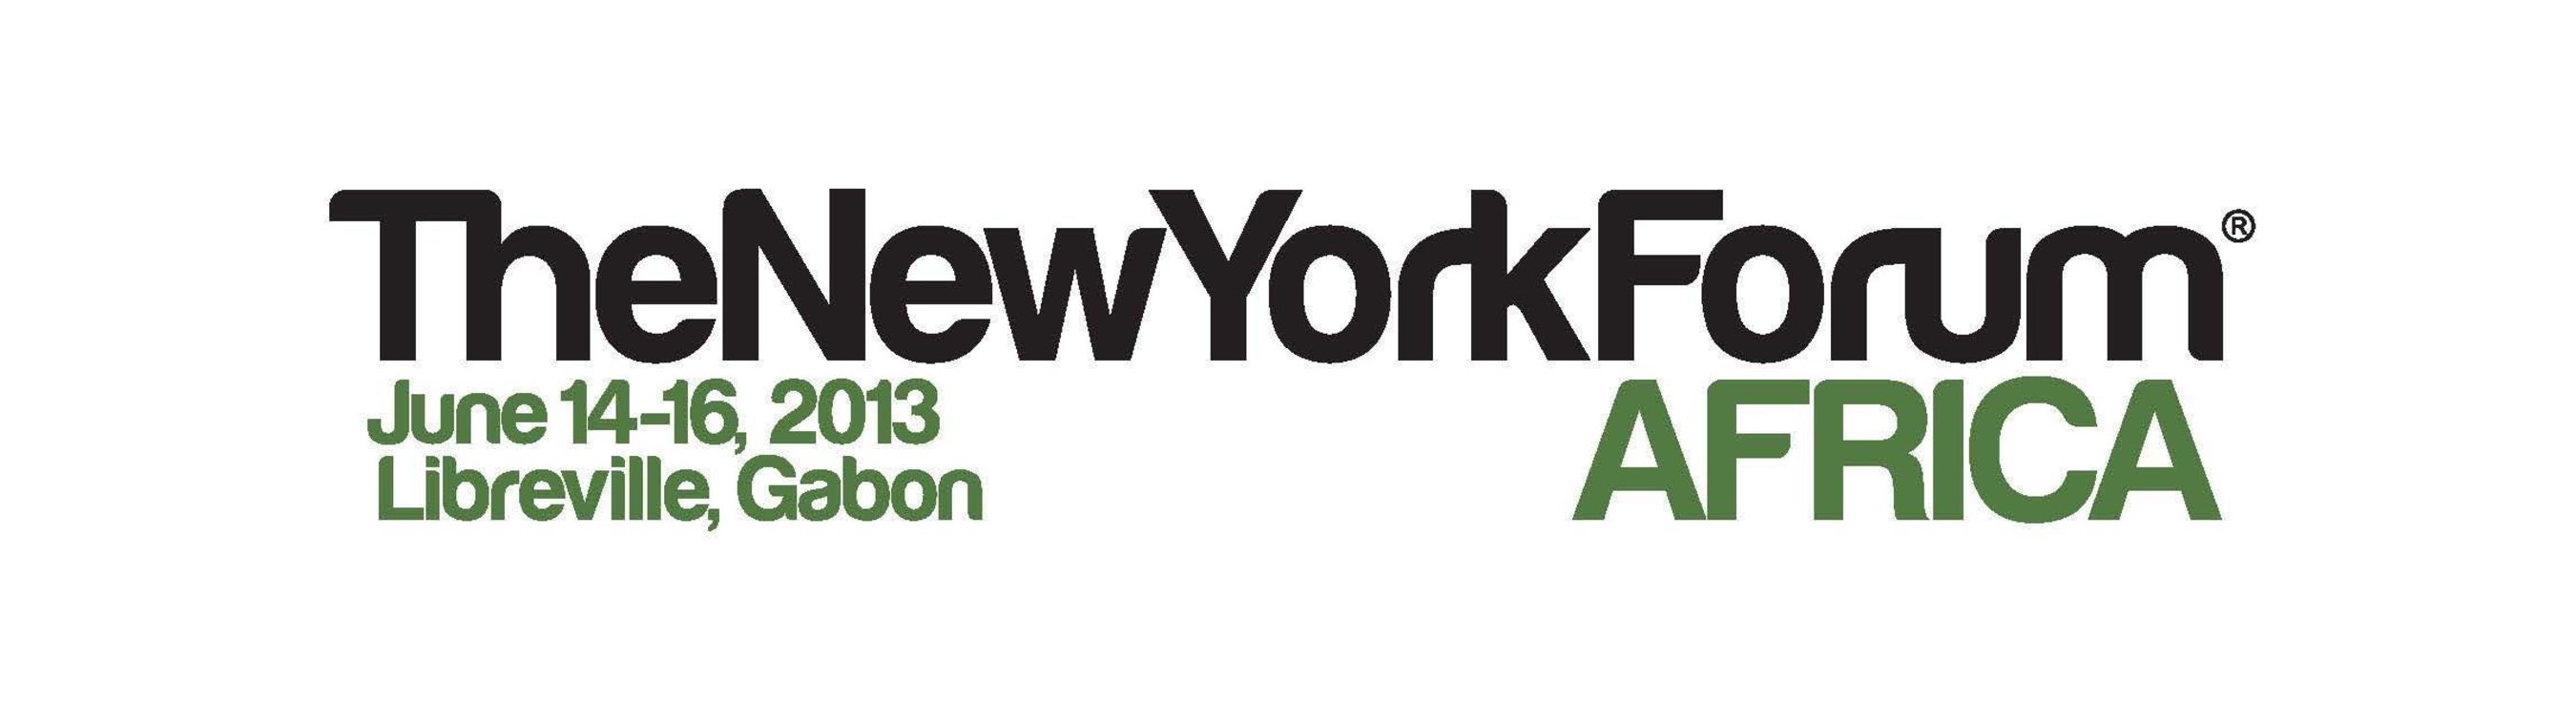 The New York Forum Africa (PRNewsFoto/The New York Forum)